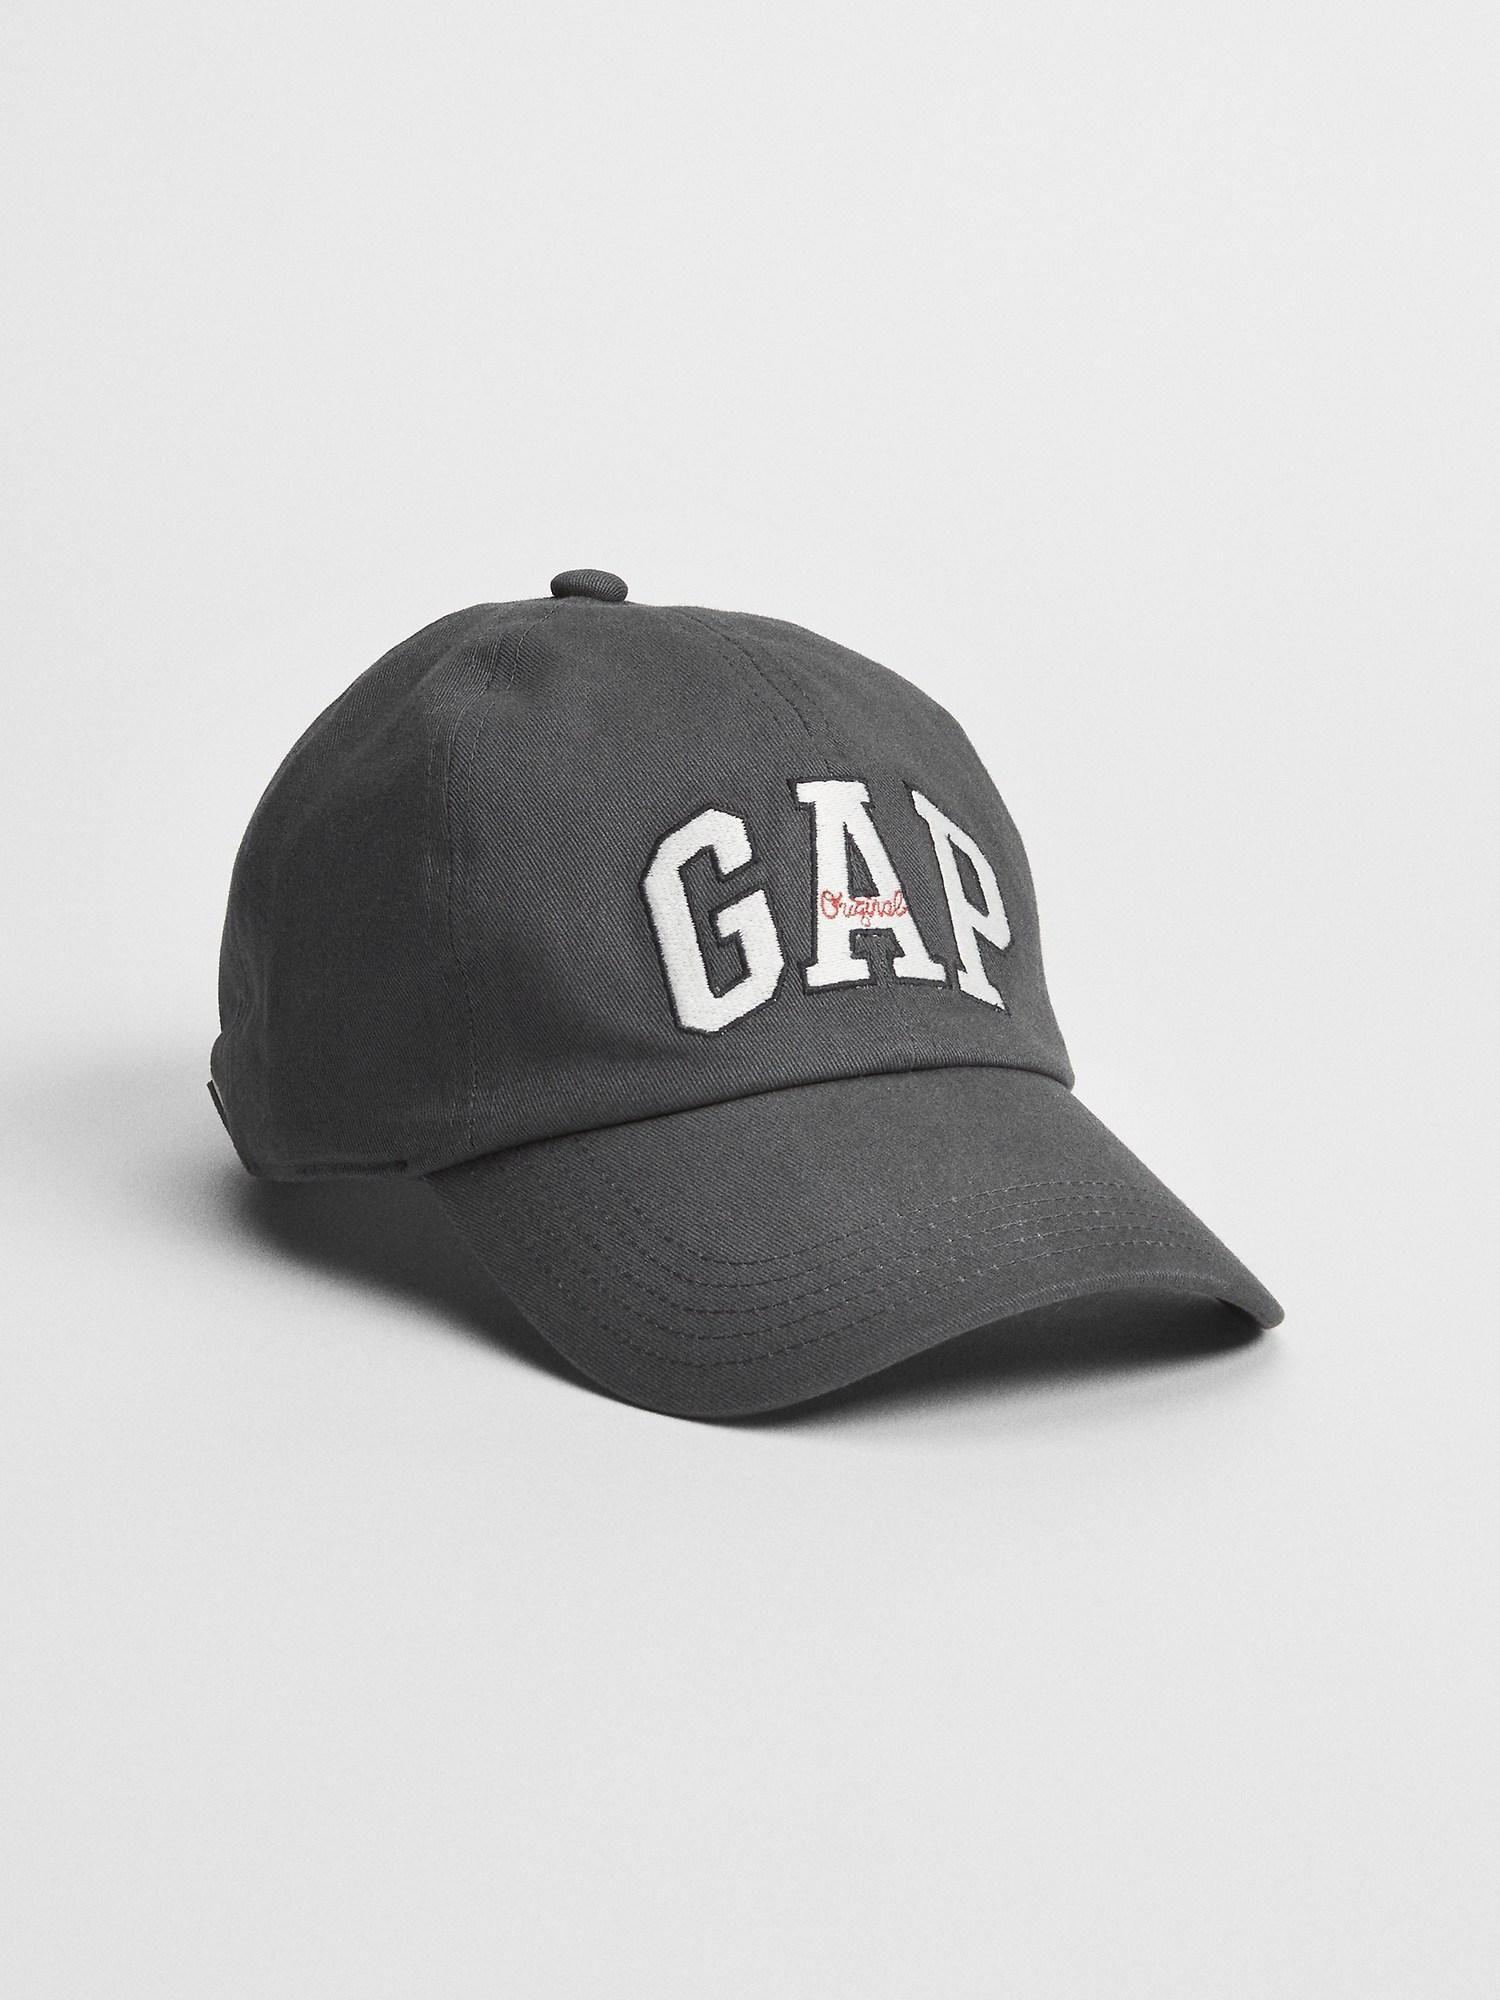 Gap Factory Logo - Lyst - Gap Factory Logo Baseball Hat in Gray for Men